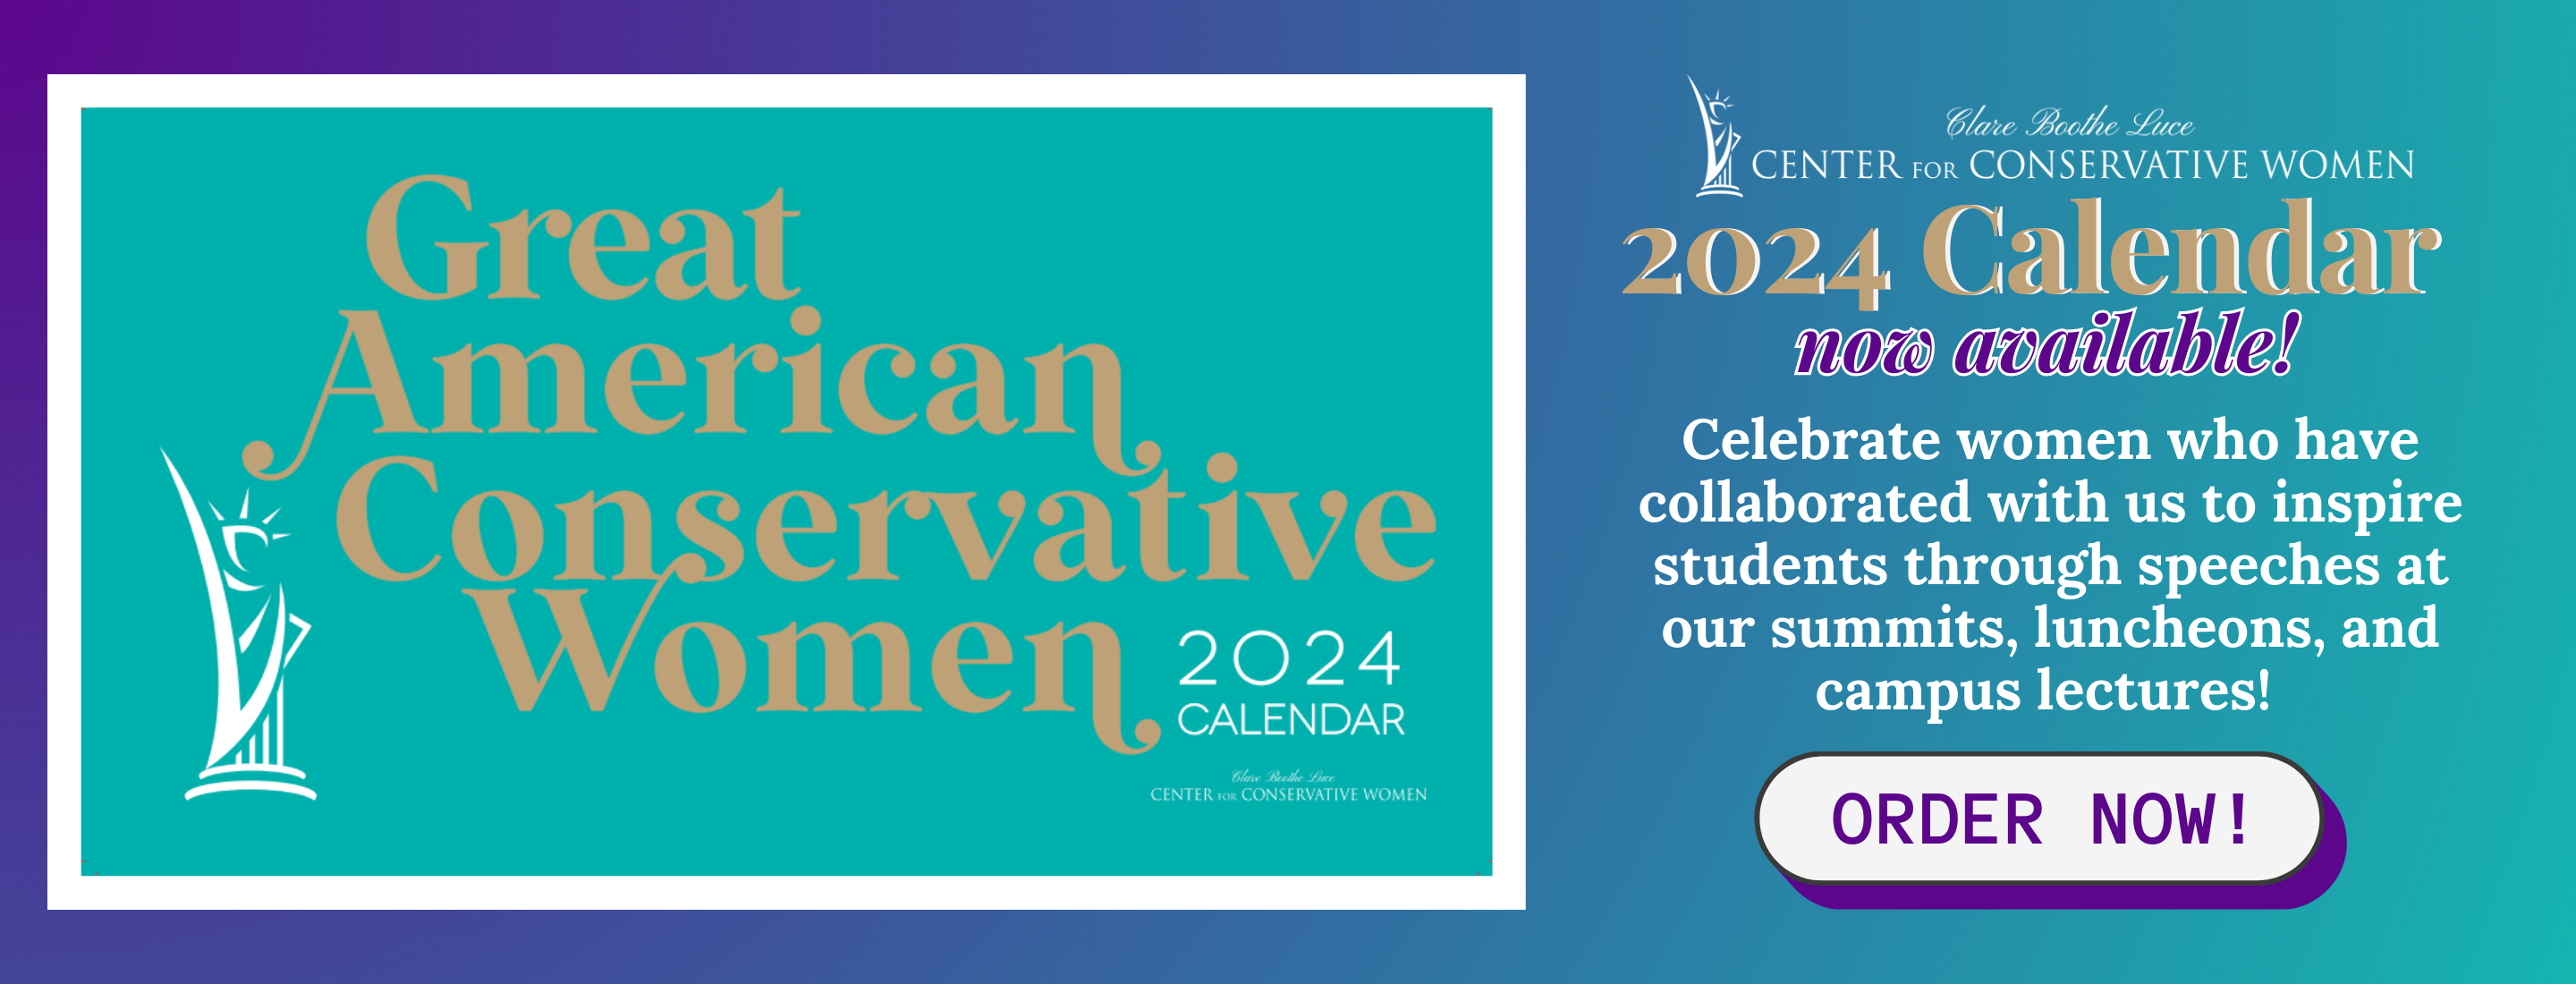 2024 Great American Conservative Women Calendar Clare Boothe Luce